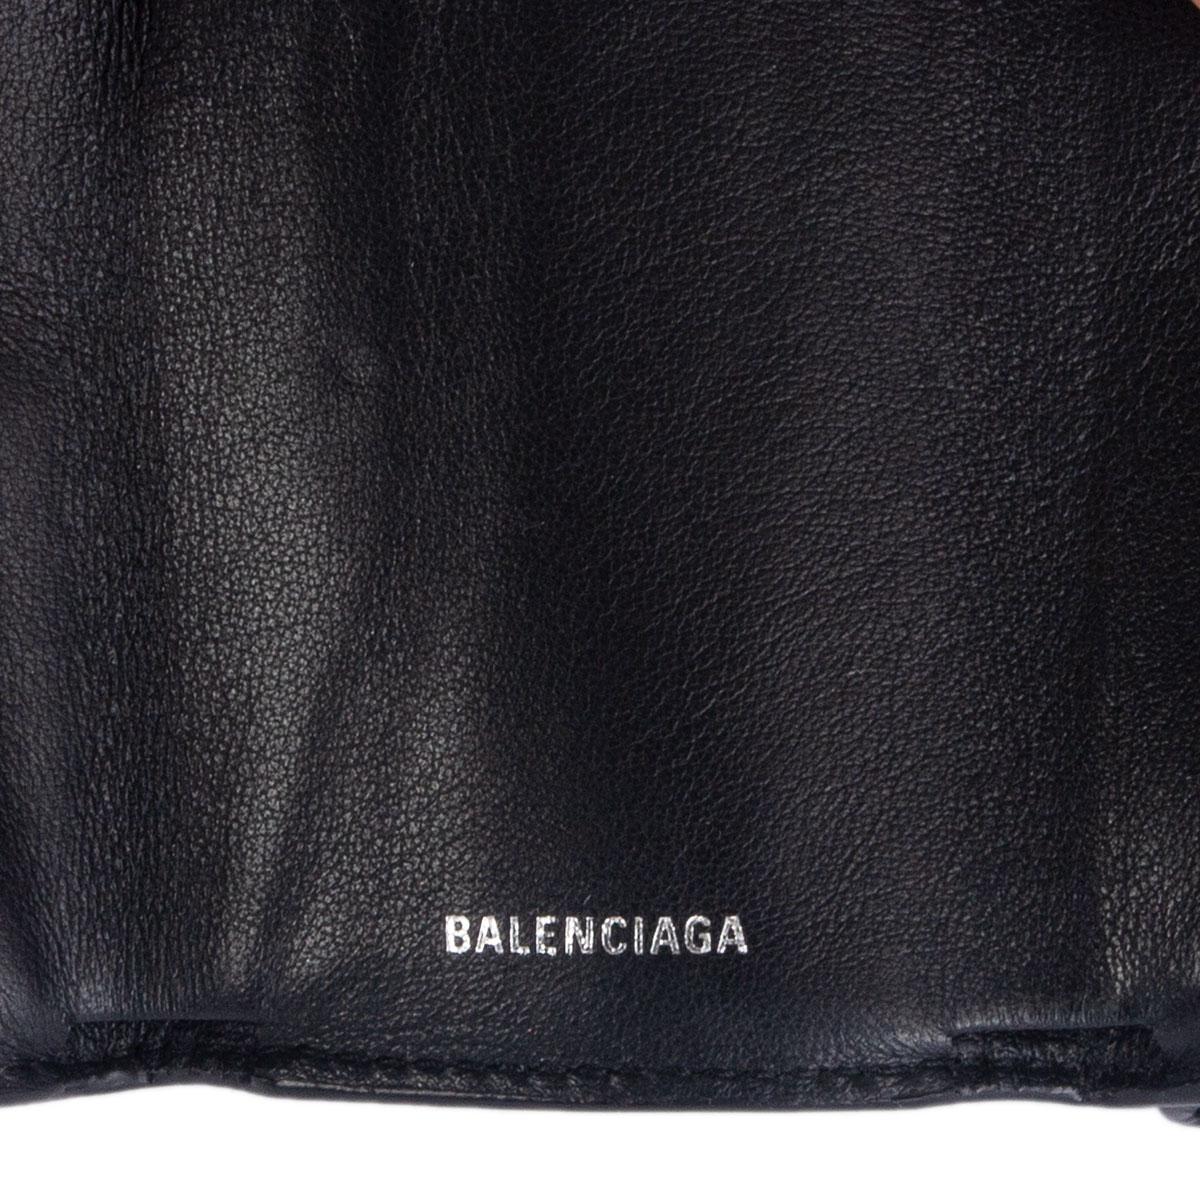 BALENCIAGA black leather CASH MINI Wallet 1